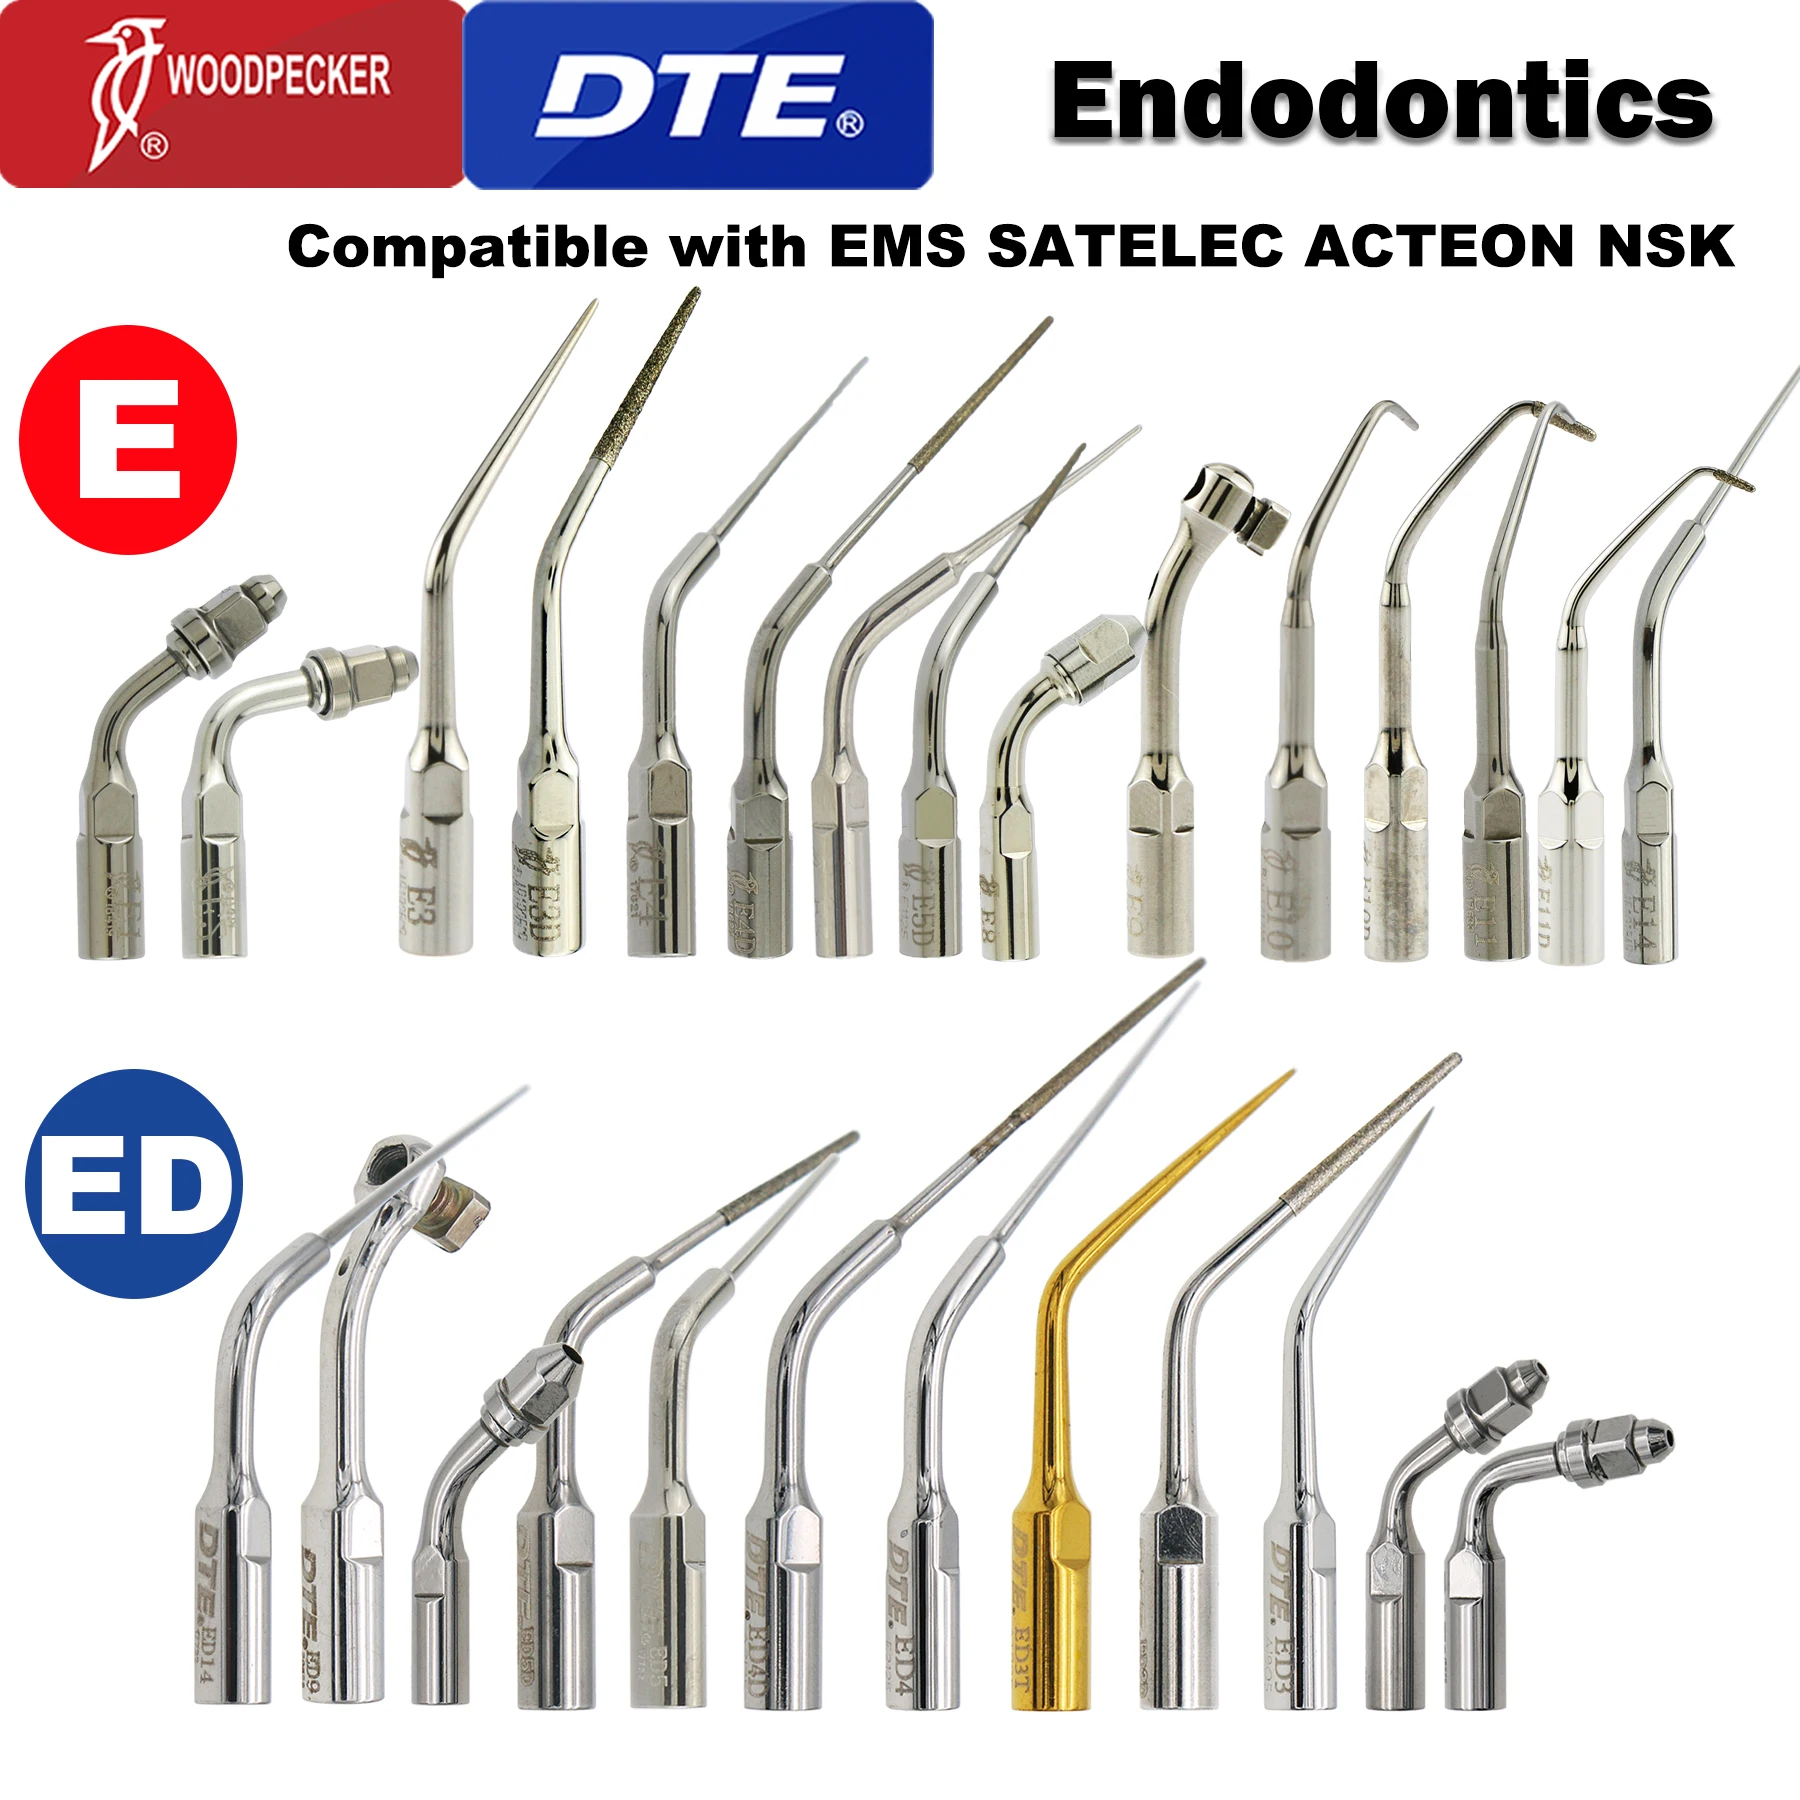 

Woodpecker DTE Tips Dental Ultrasonic Scaler Tips E/ED Scaler Tips Endodontics Fit EMS Satelec NSK Scaler Handpiece